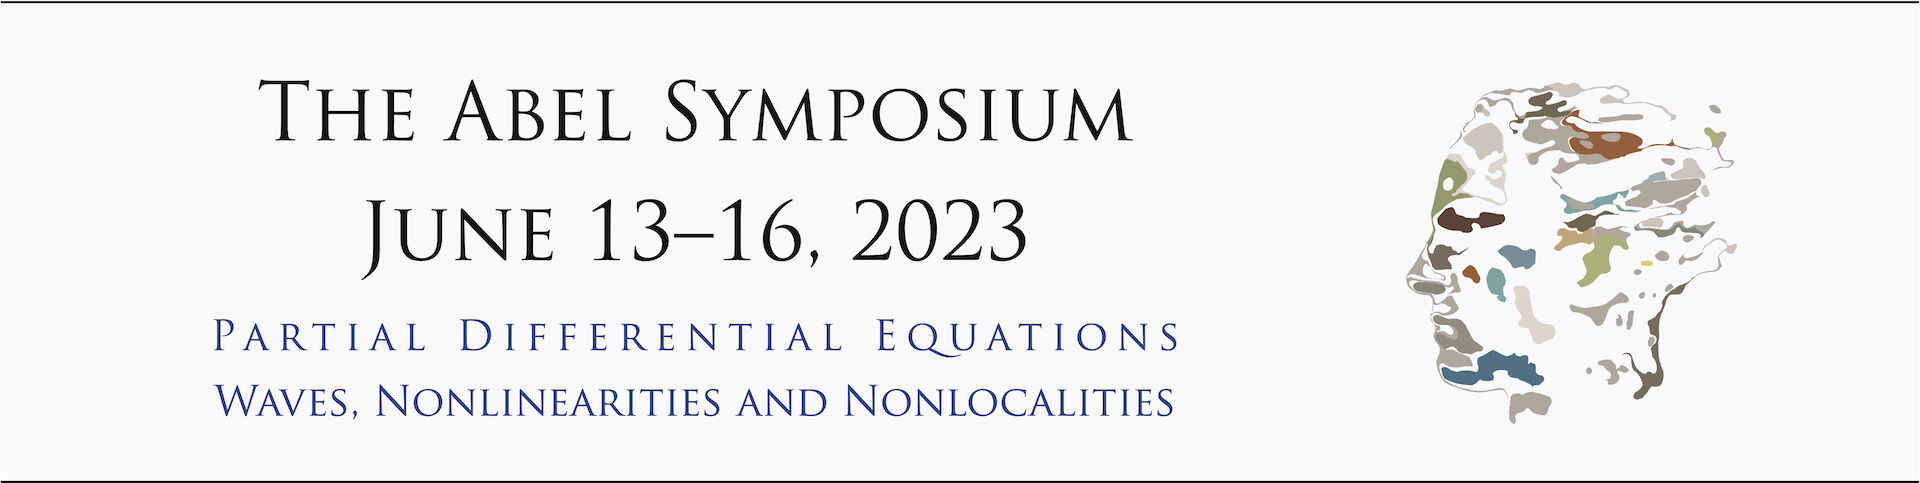 The Abel Symposium. Logo